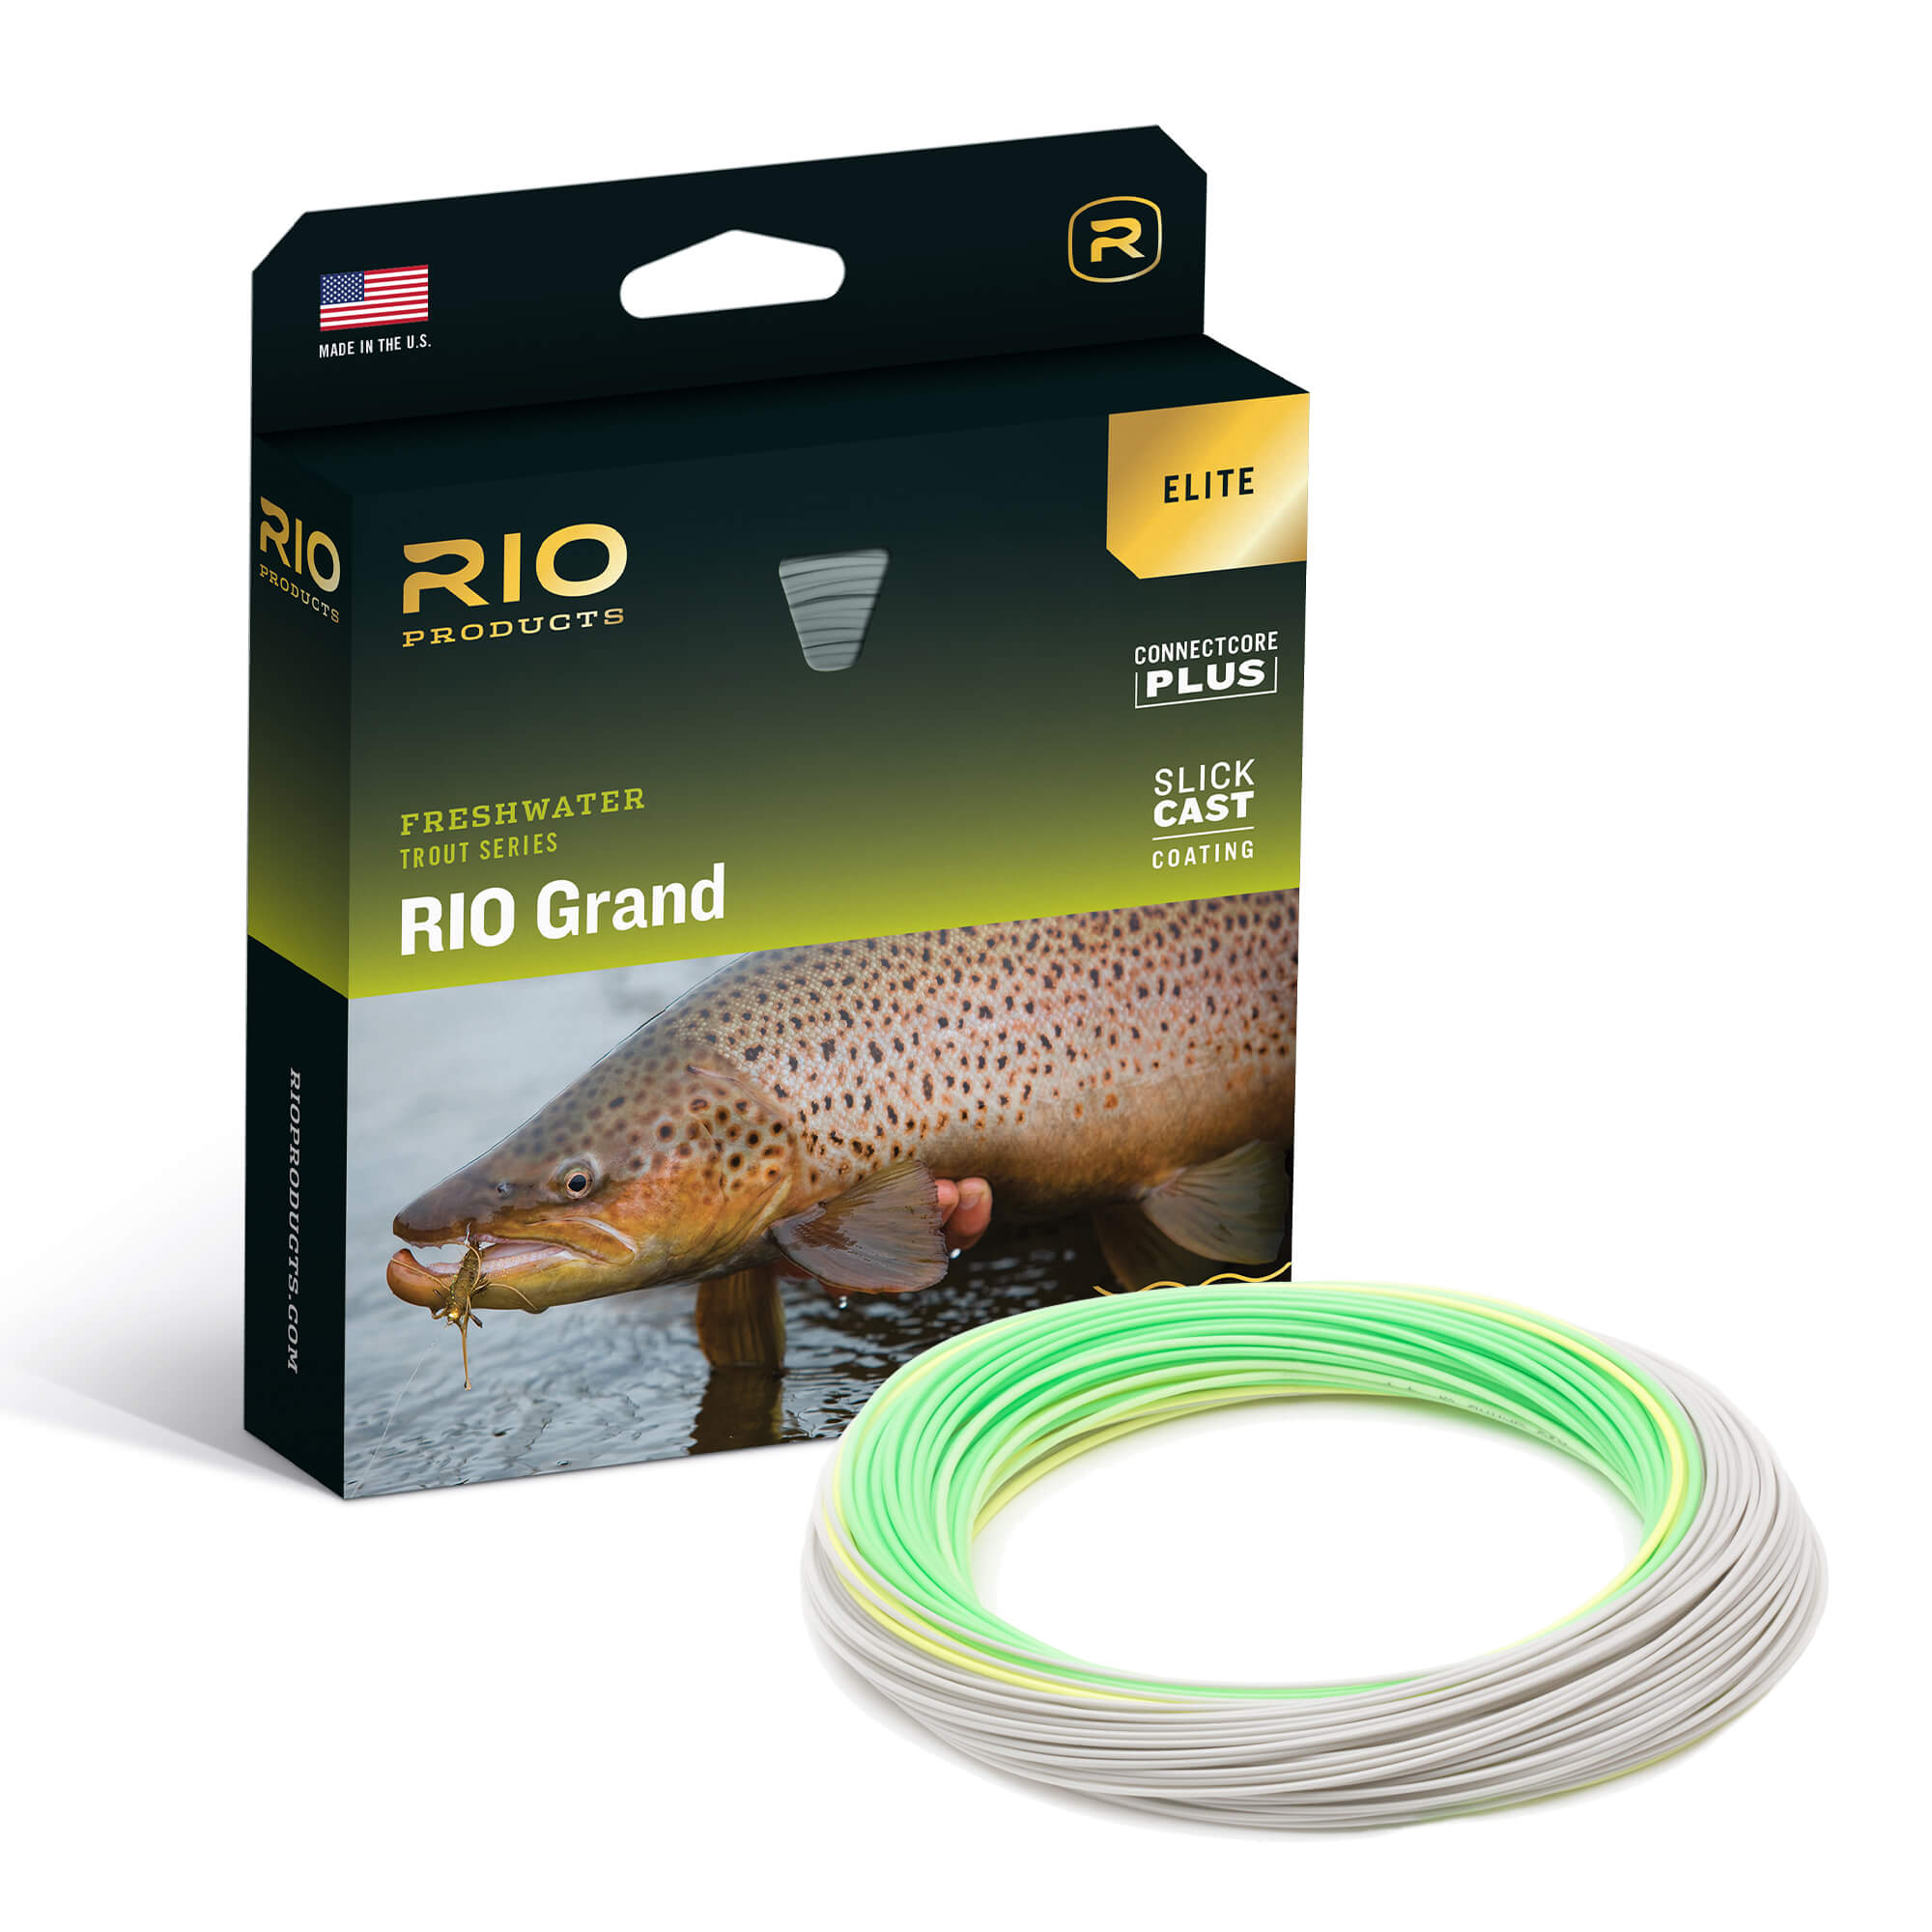 Elite RIO Grand Fly Line – Guide Flyfishing